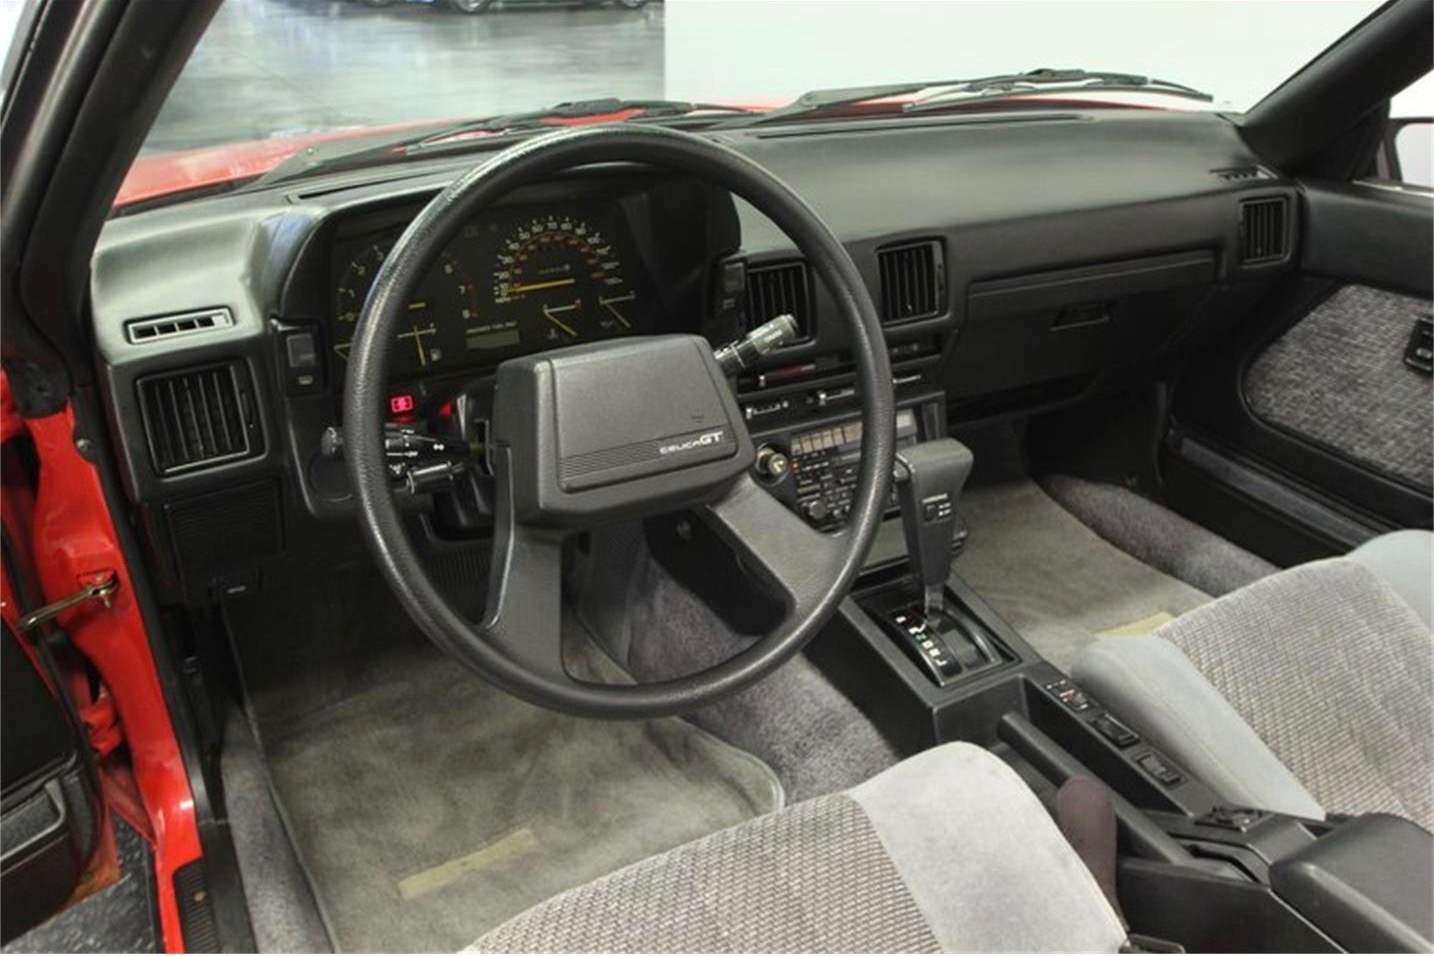 1985 Toyota Celica GTS, ’85 Celica GTS is a top-down future classic, ClassicCars.com Journal